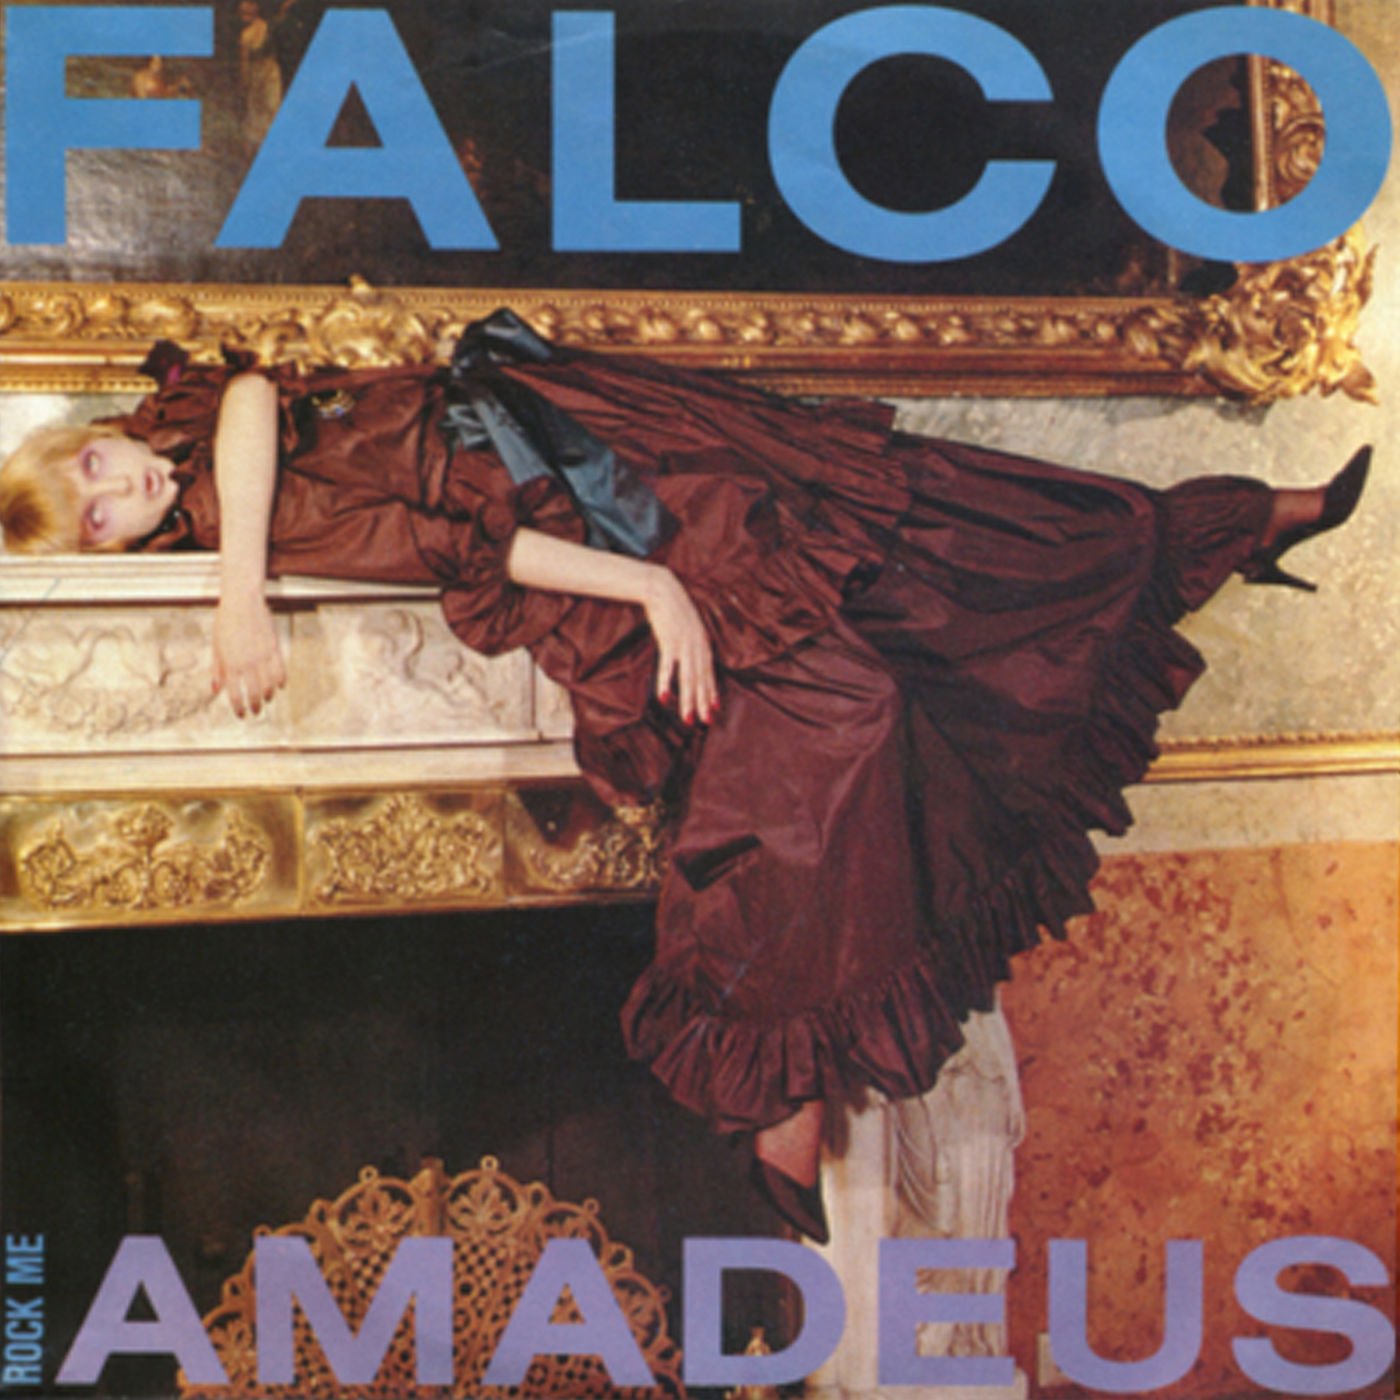 falco rock me amadeus mp3 free download